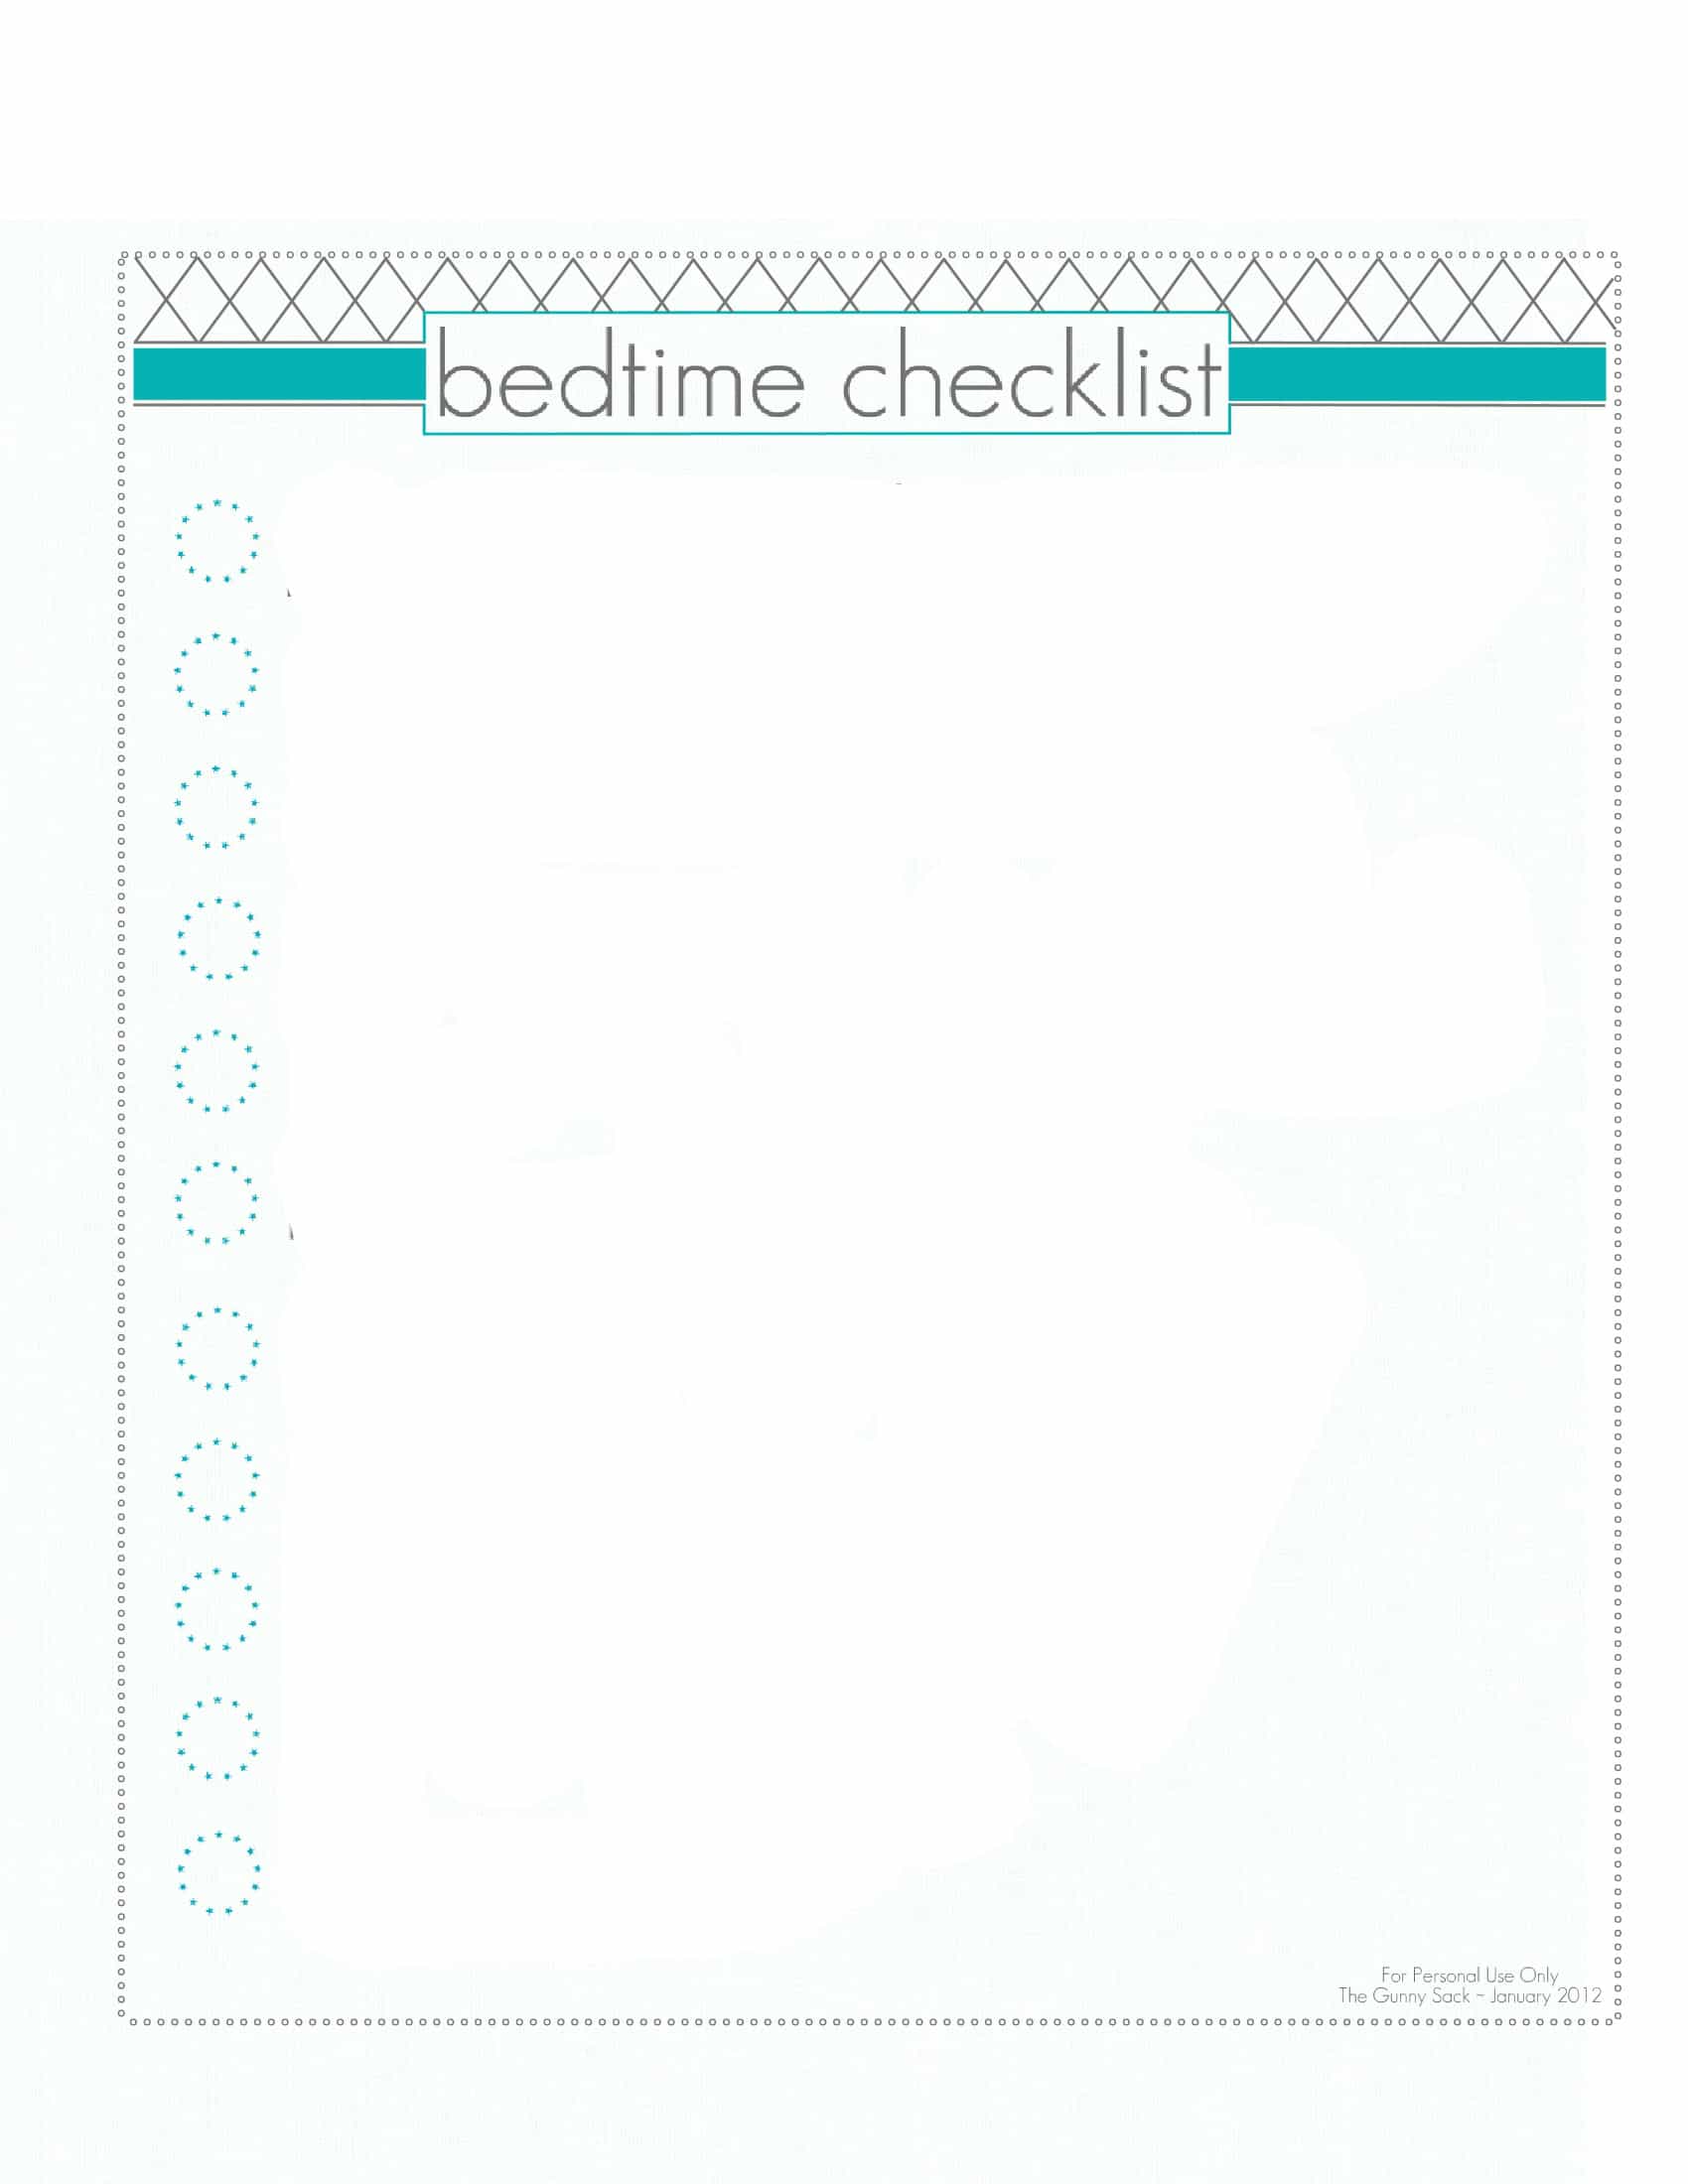 Bedtime Checklist Blank